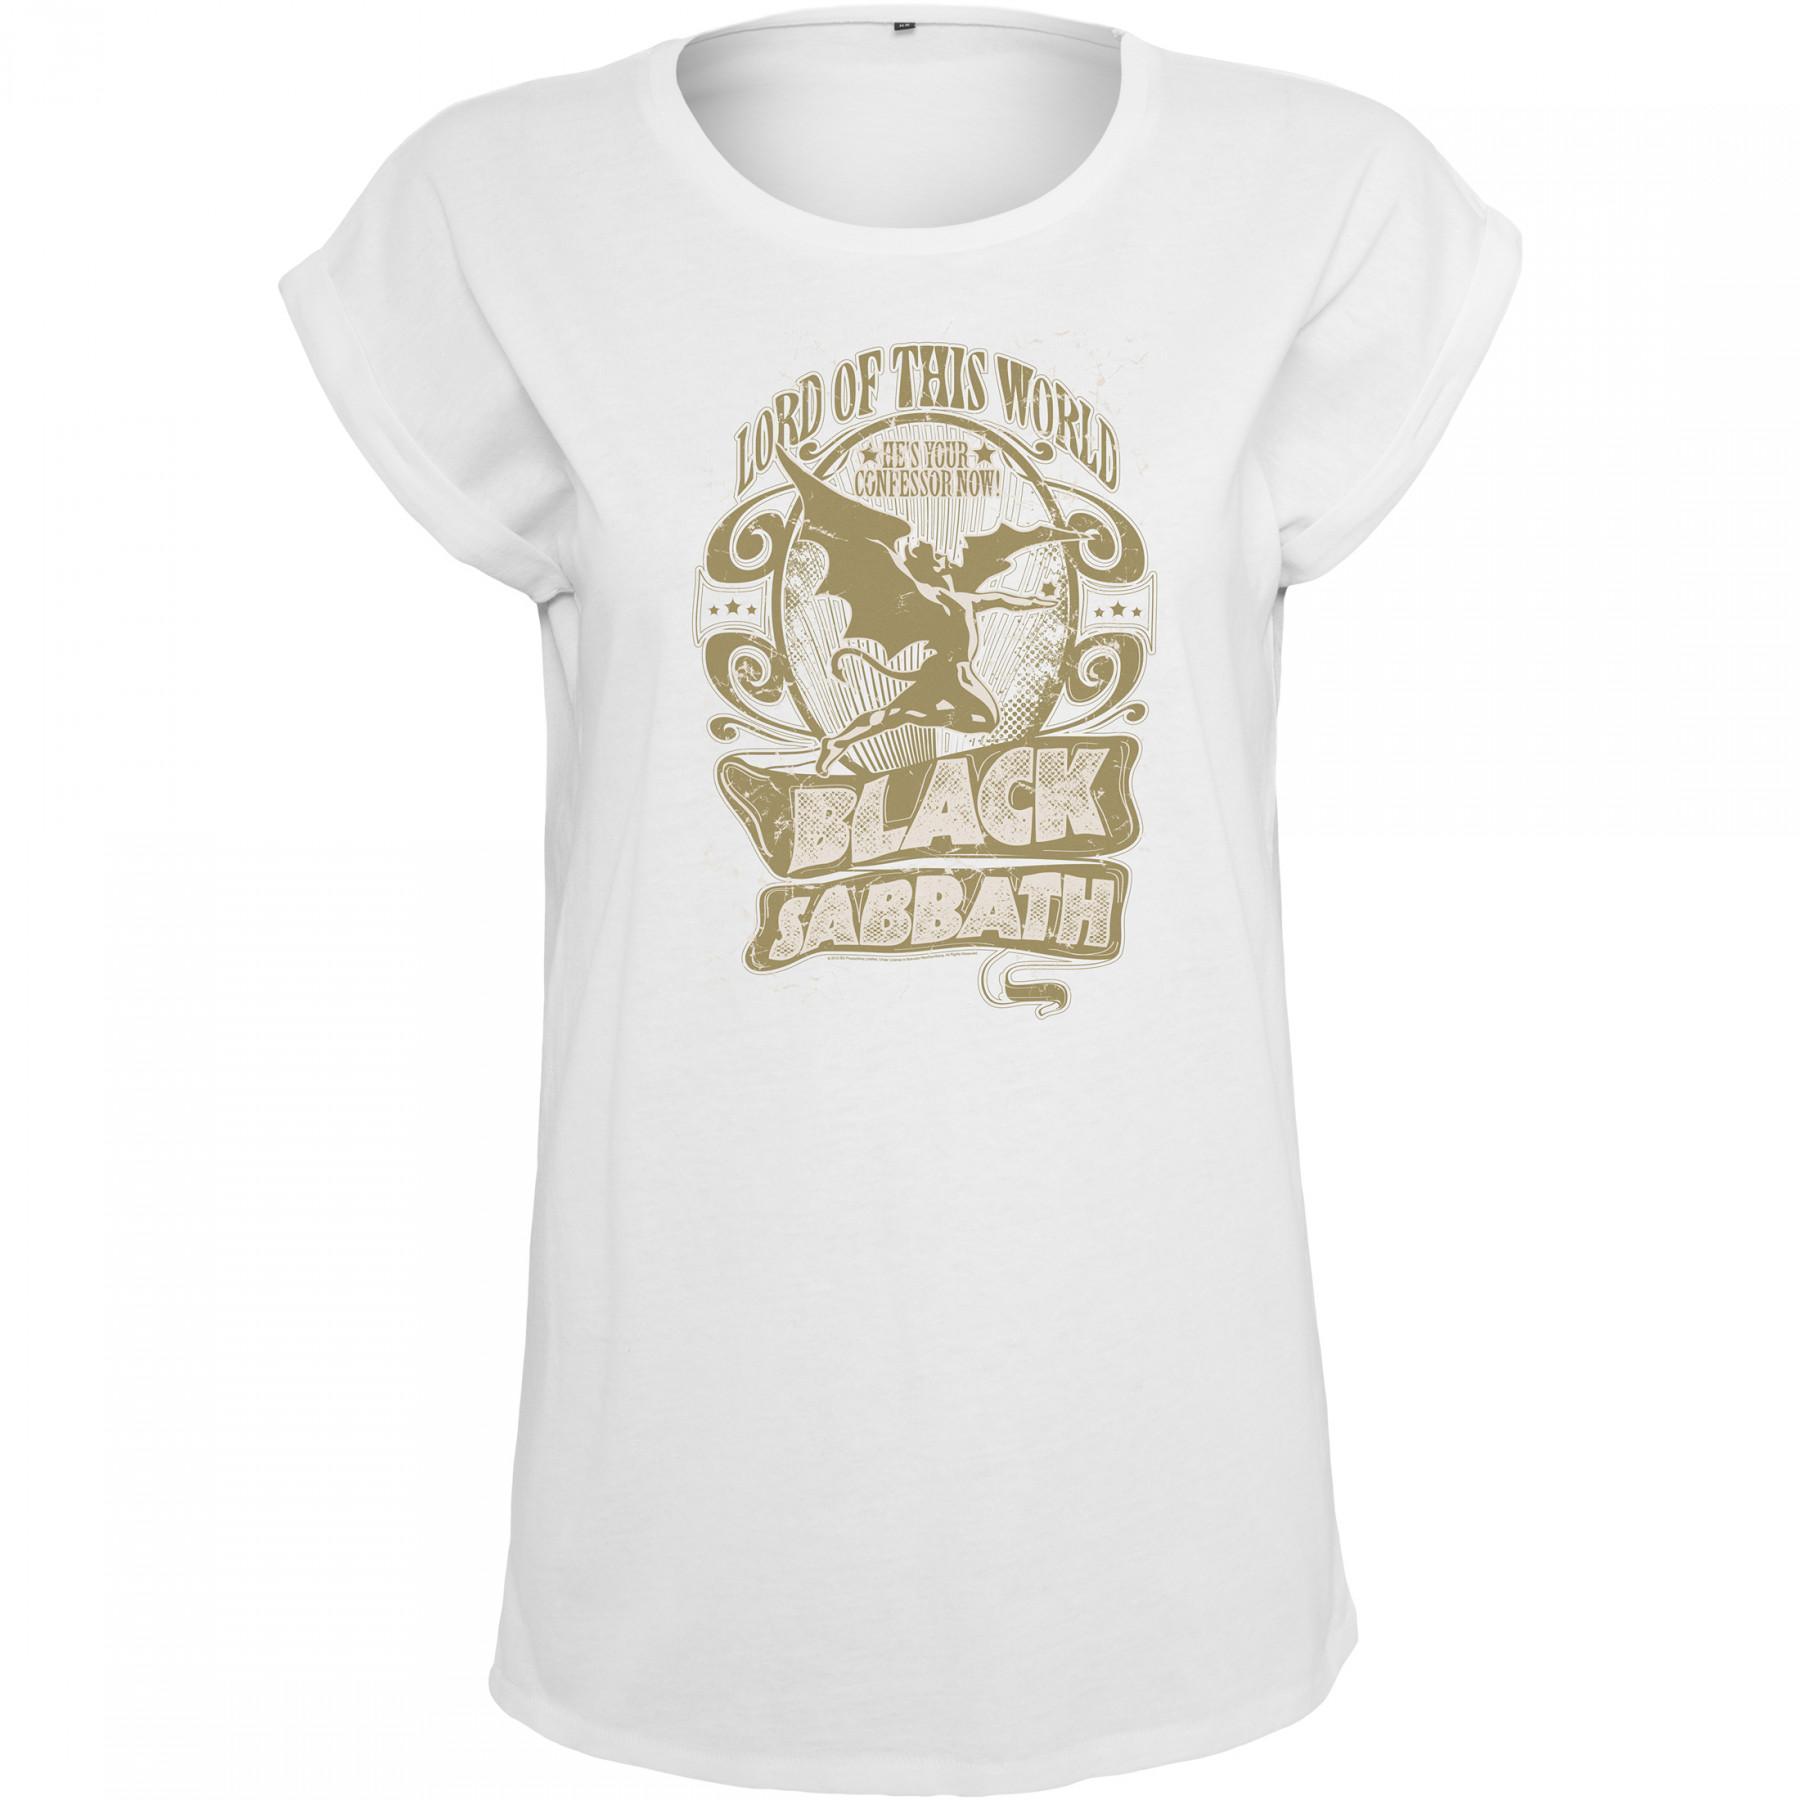 t-shirt damski urban classic bla abbath lotw white